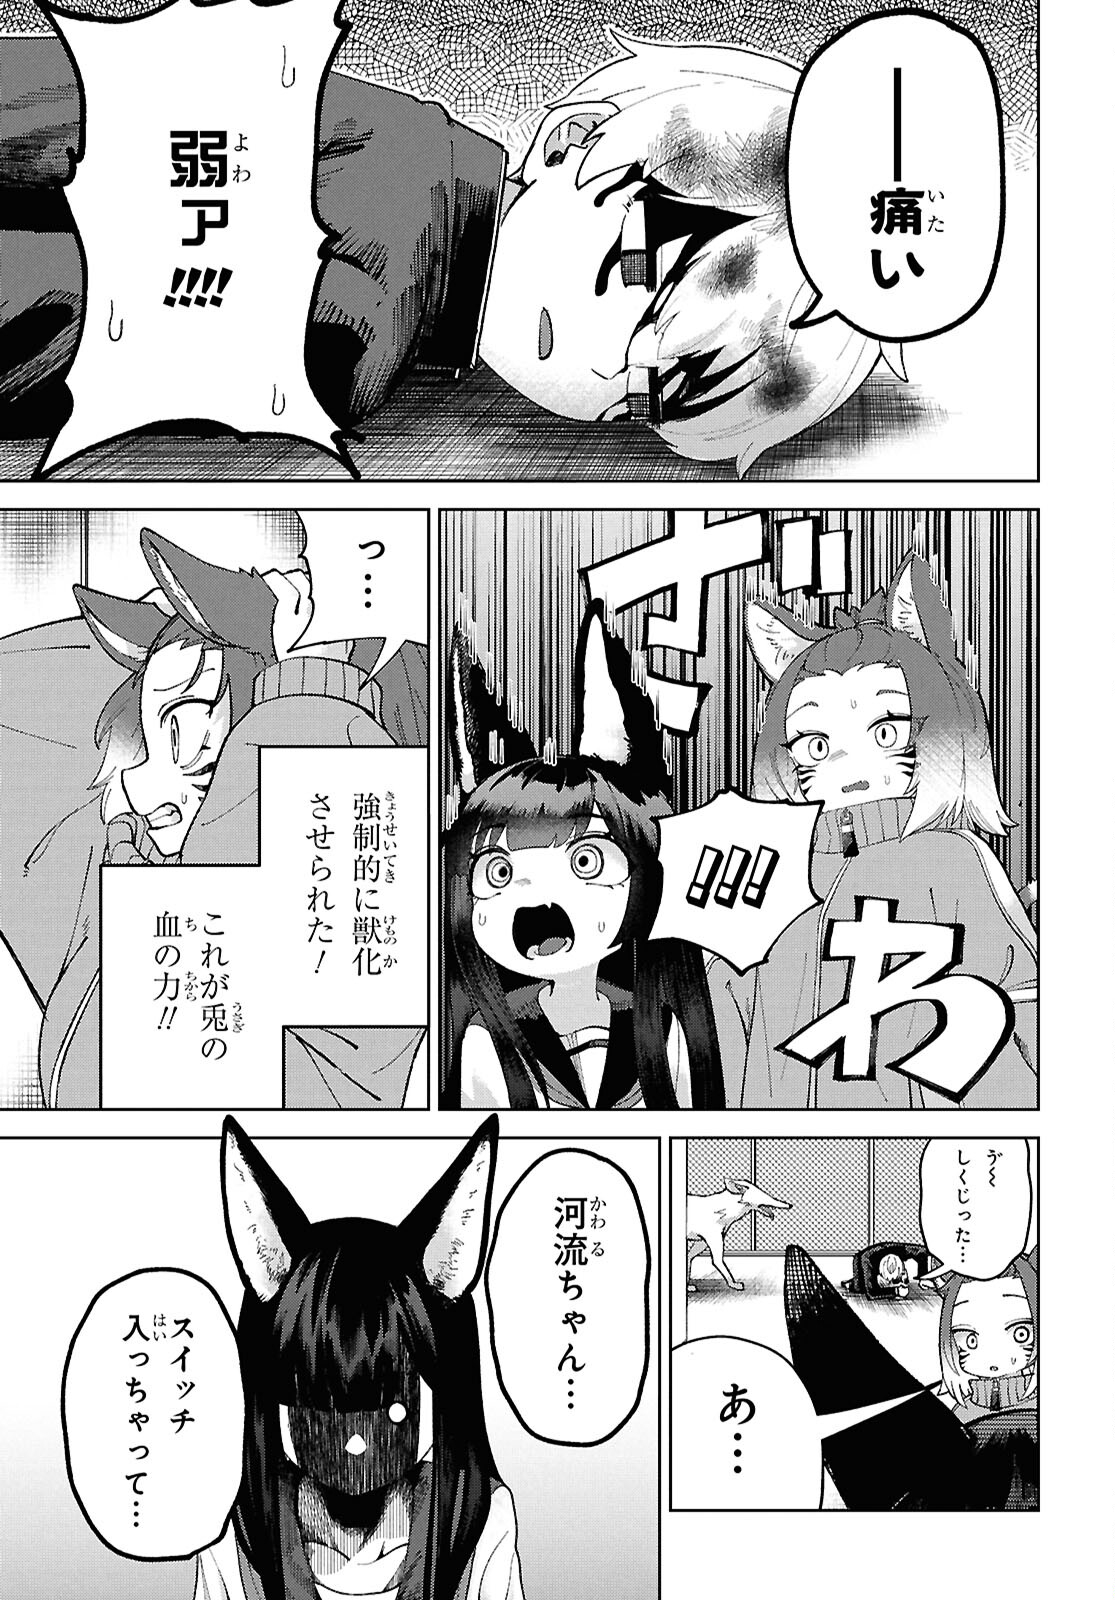 Garuru Girl - Chapter 4 - Page 29